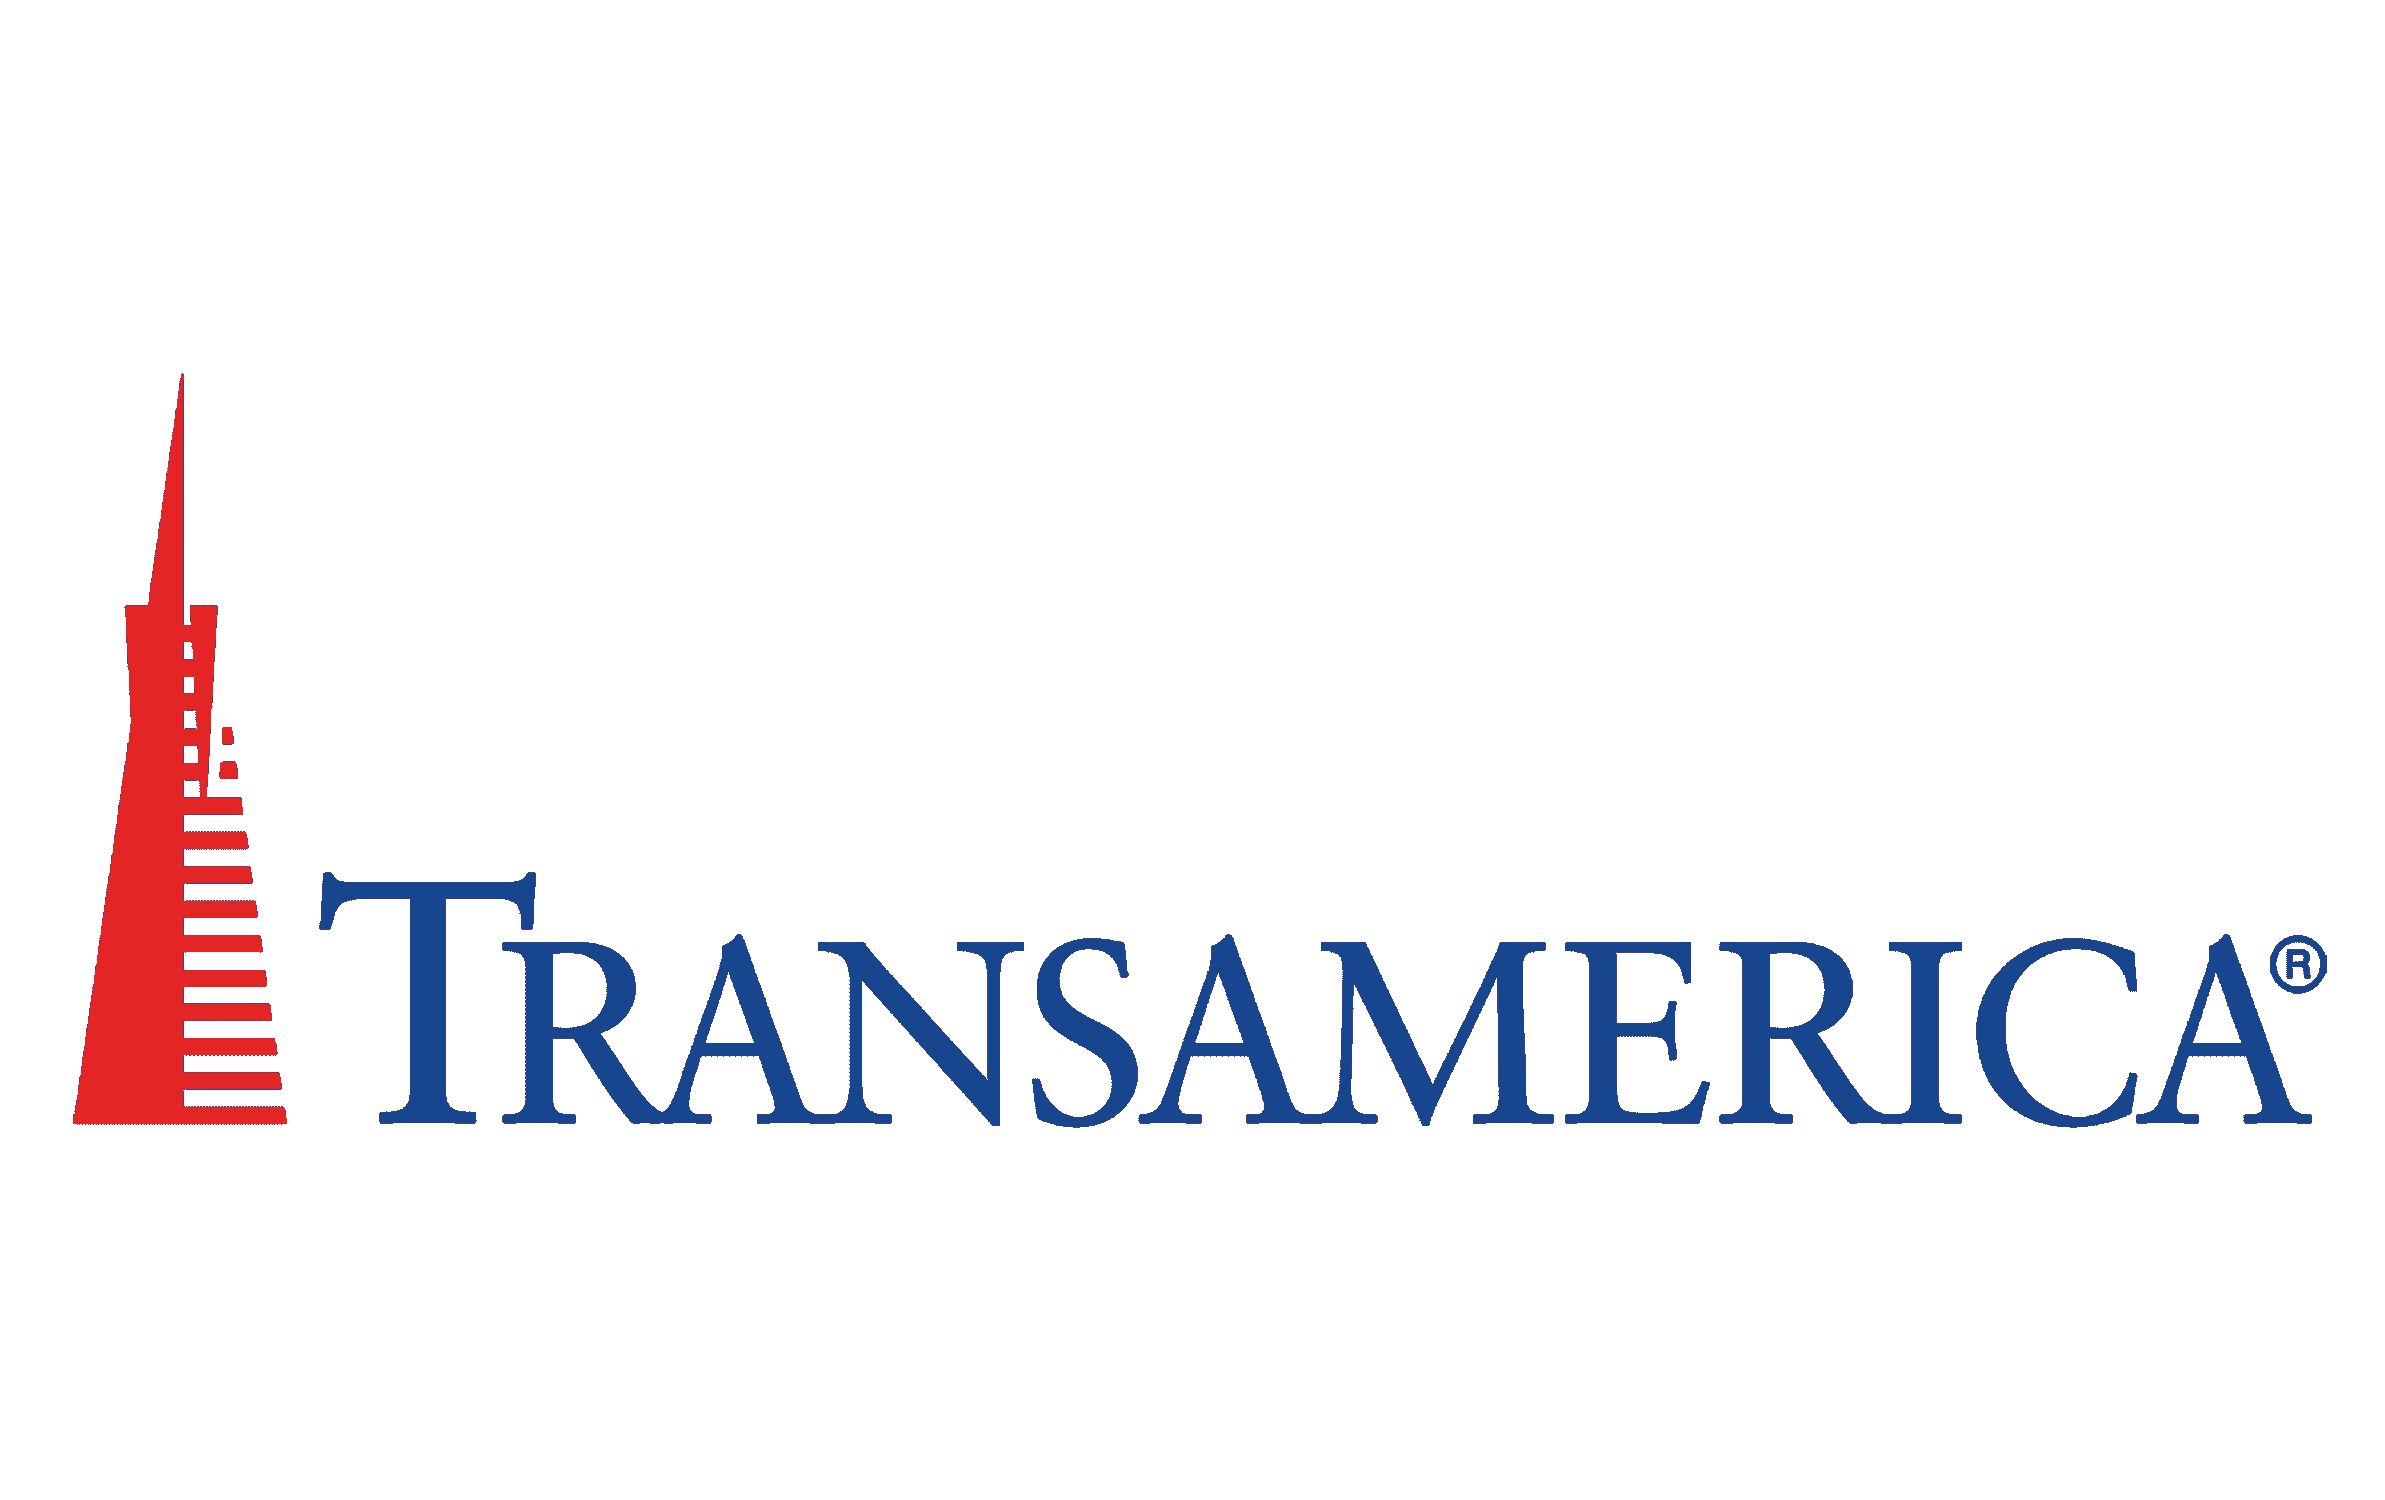 Transamerica_logo_PNG1.png